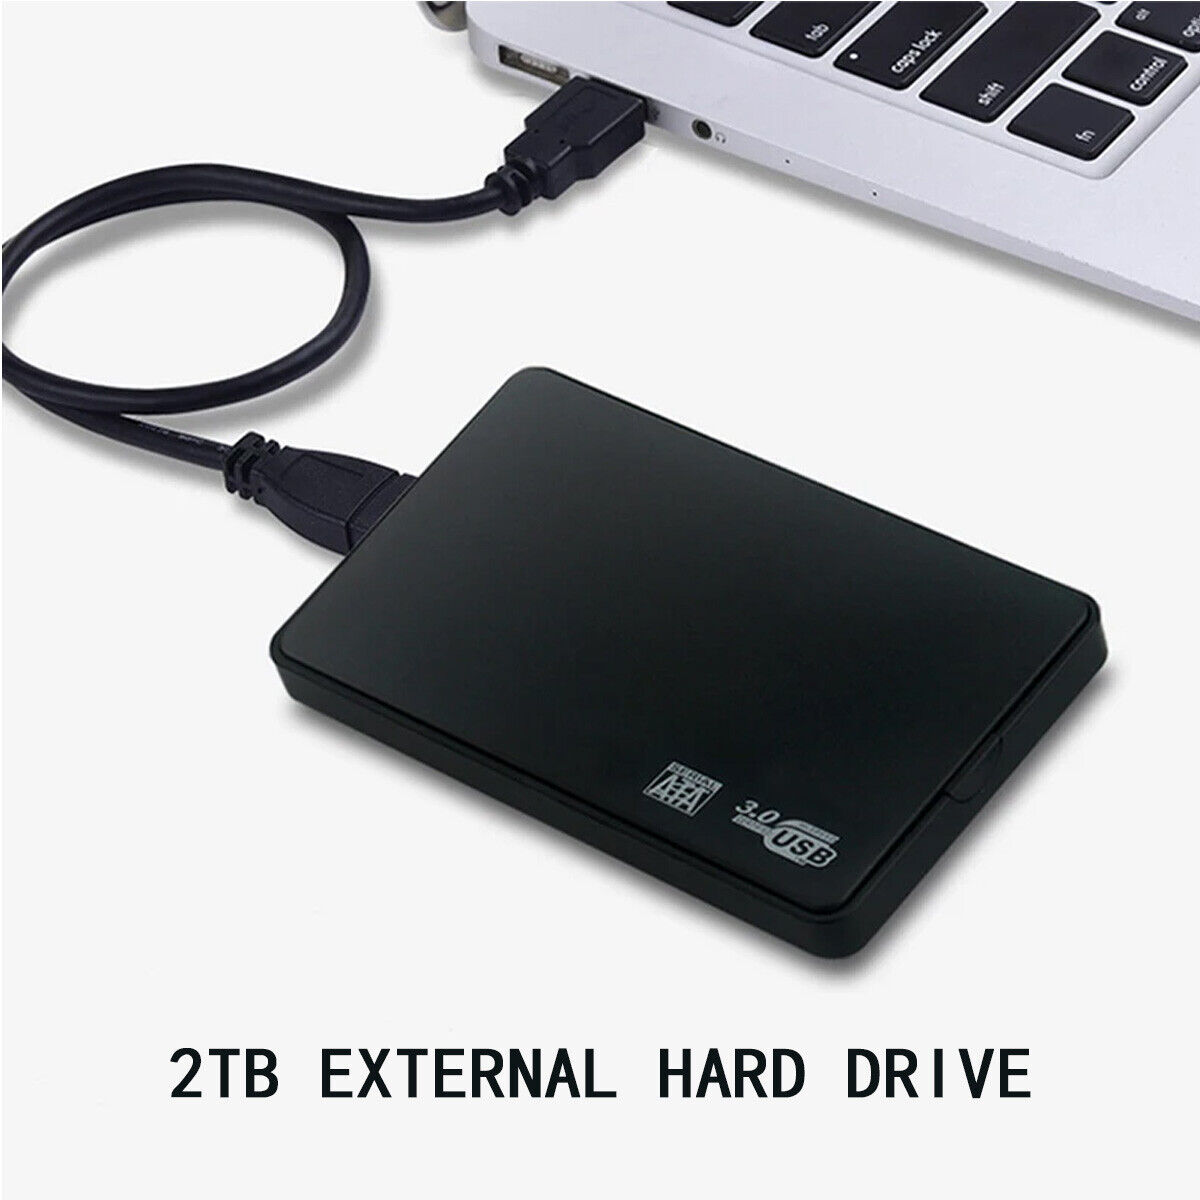 2TB External Hard Drive Portable 2TB Mobile External Mini Hard Disk for Laptop